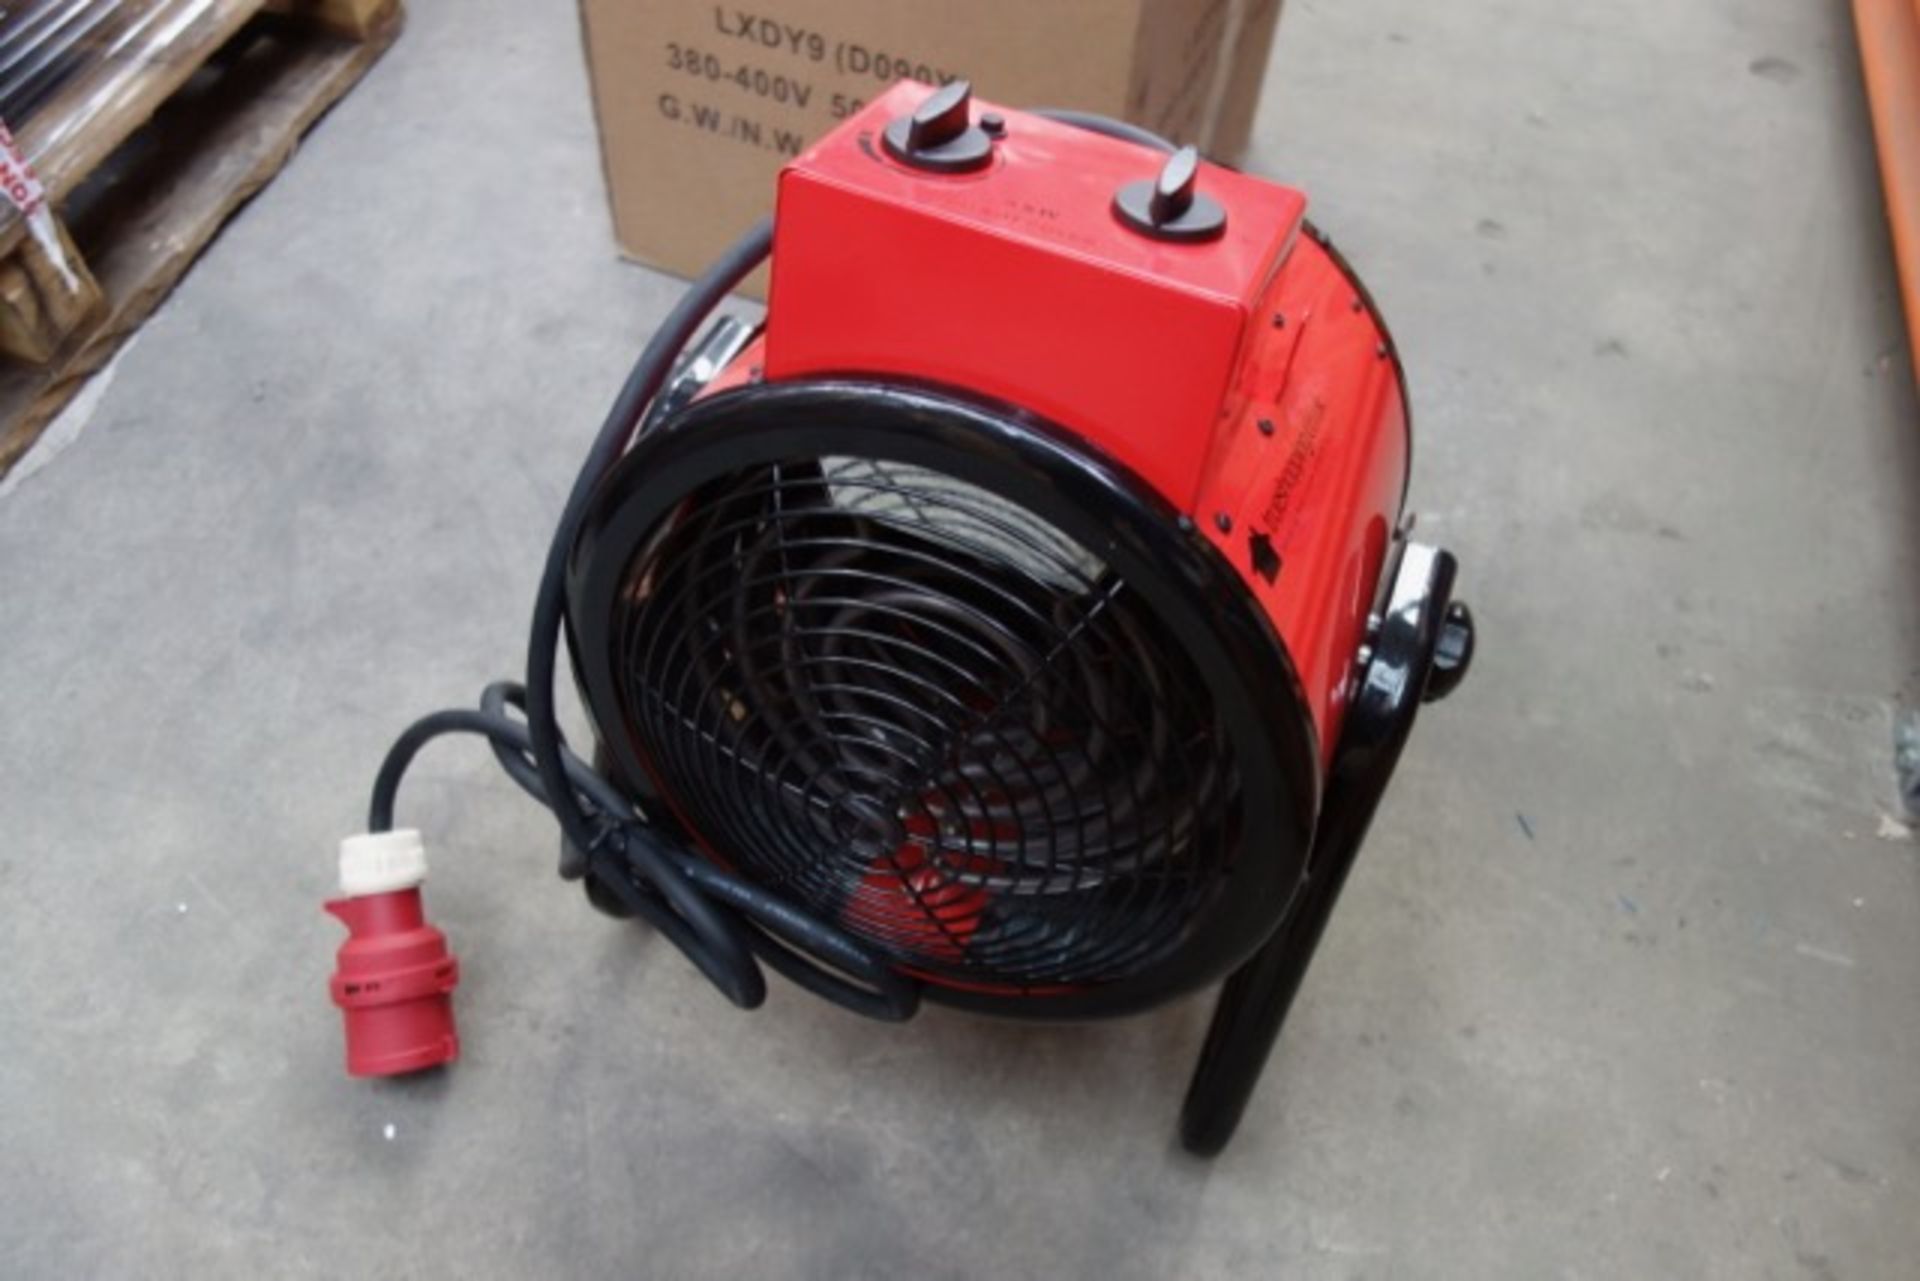 1 x 9KW Industial Fan Heater. 380-400v-50Hz 9KW. Very high heat output. RRP £299.99.